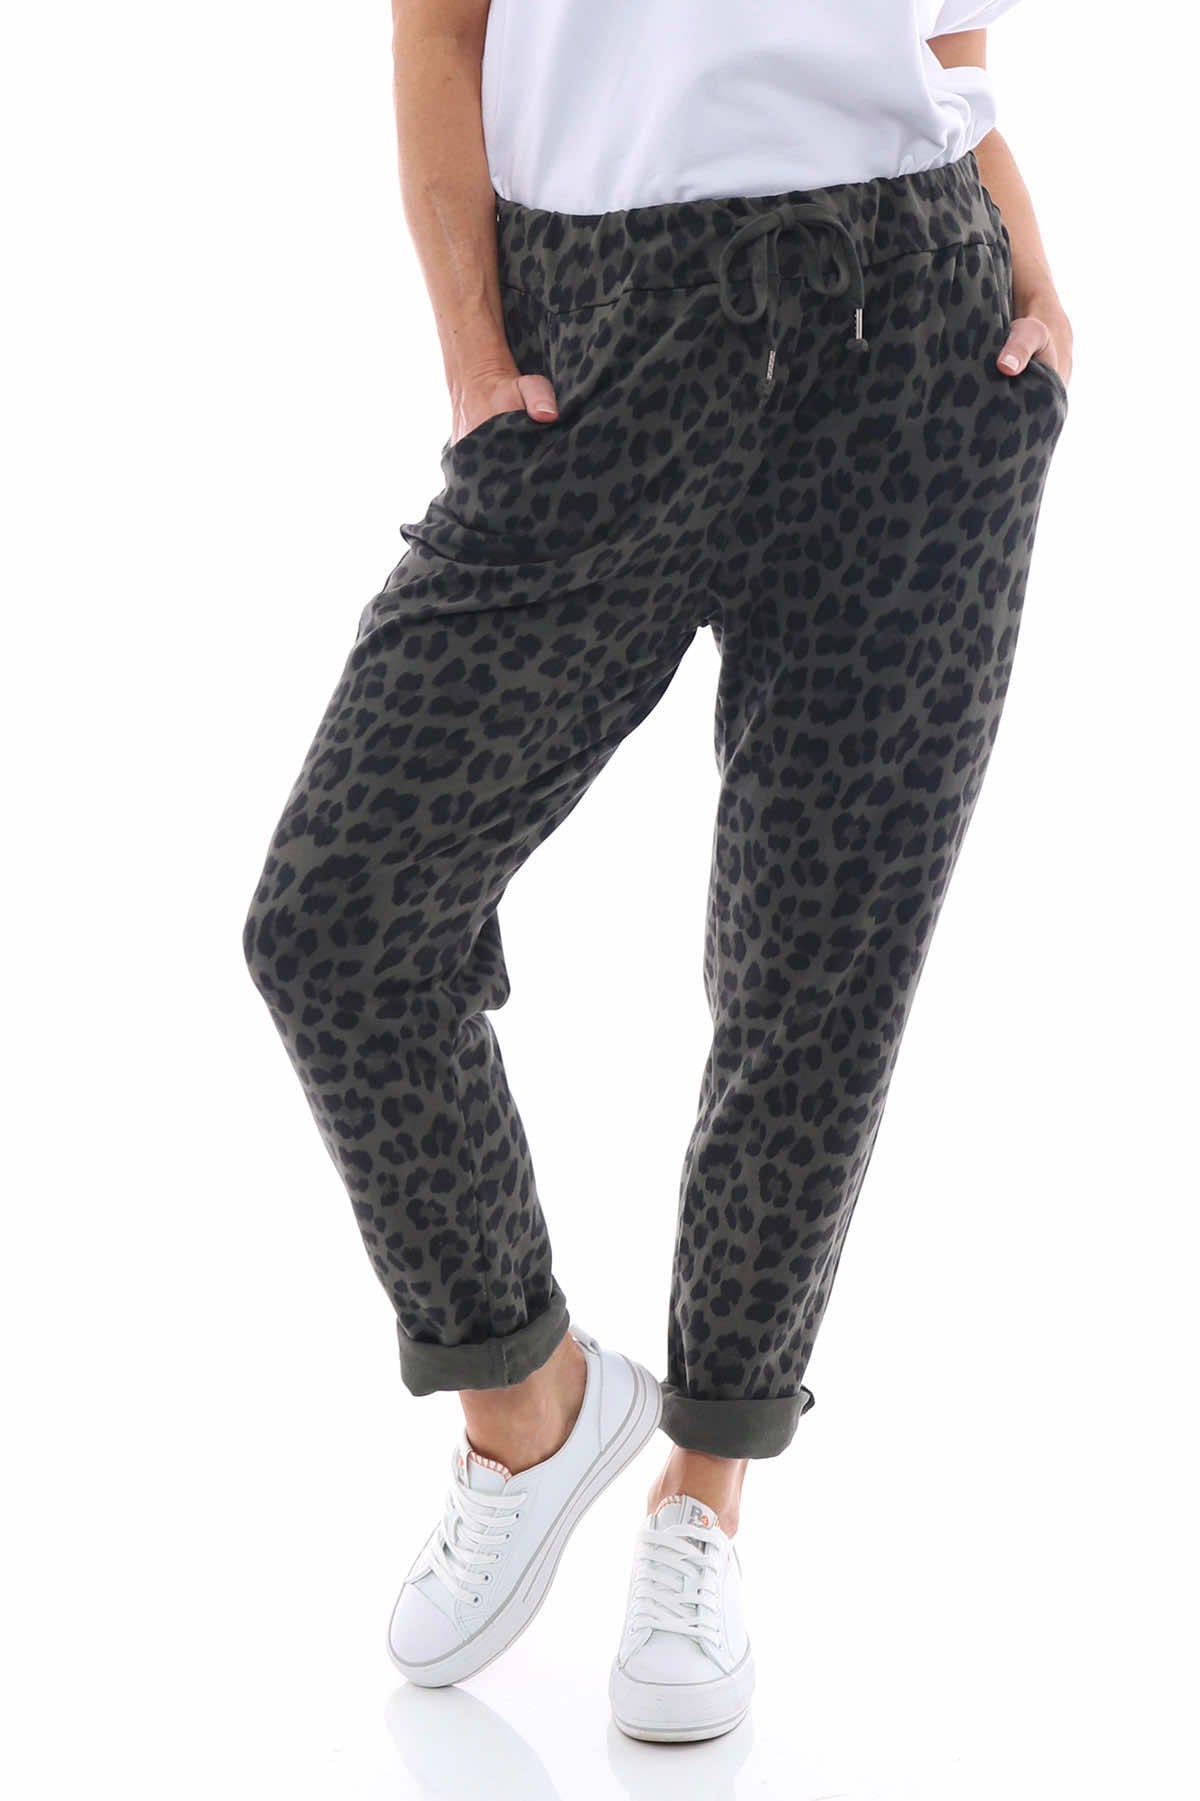 Minskip Leopard Print Jersey Pants Khaki